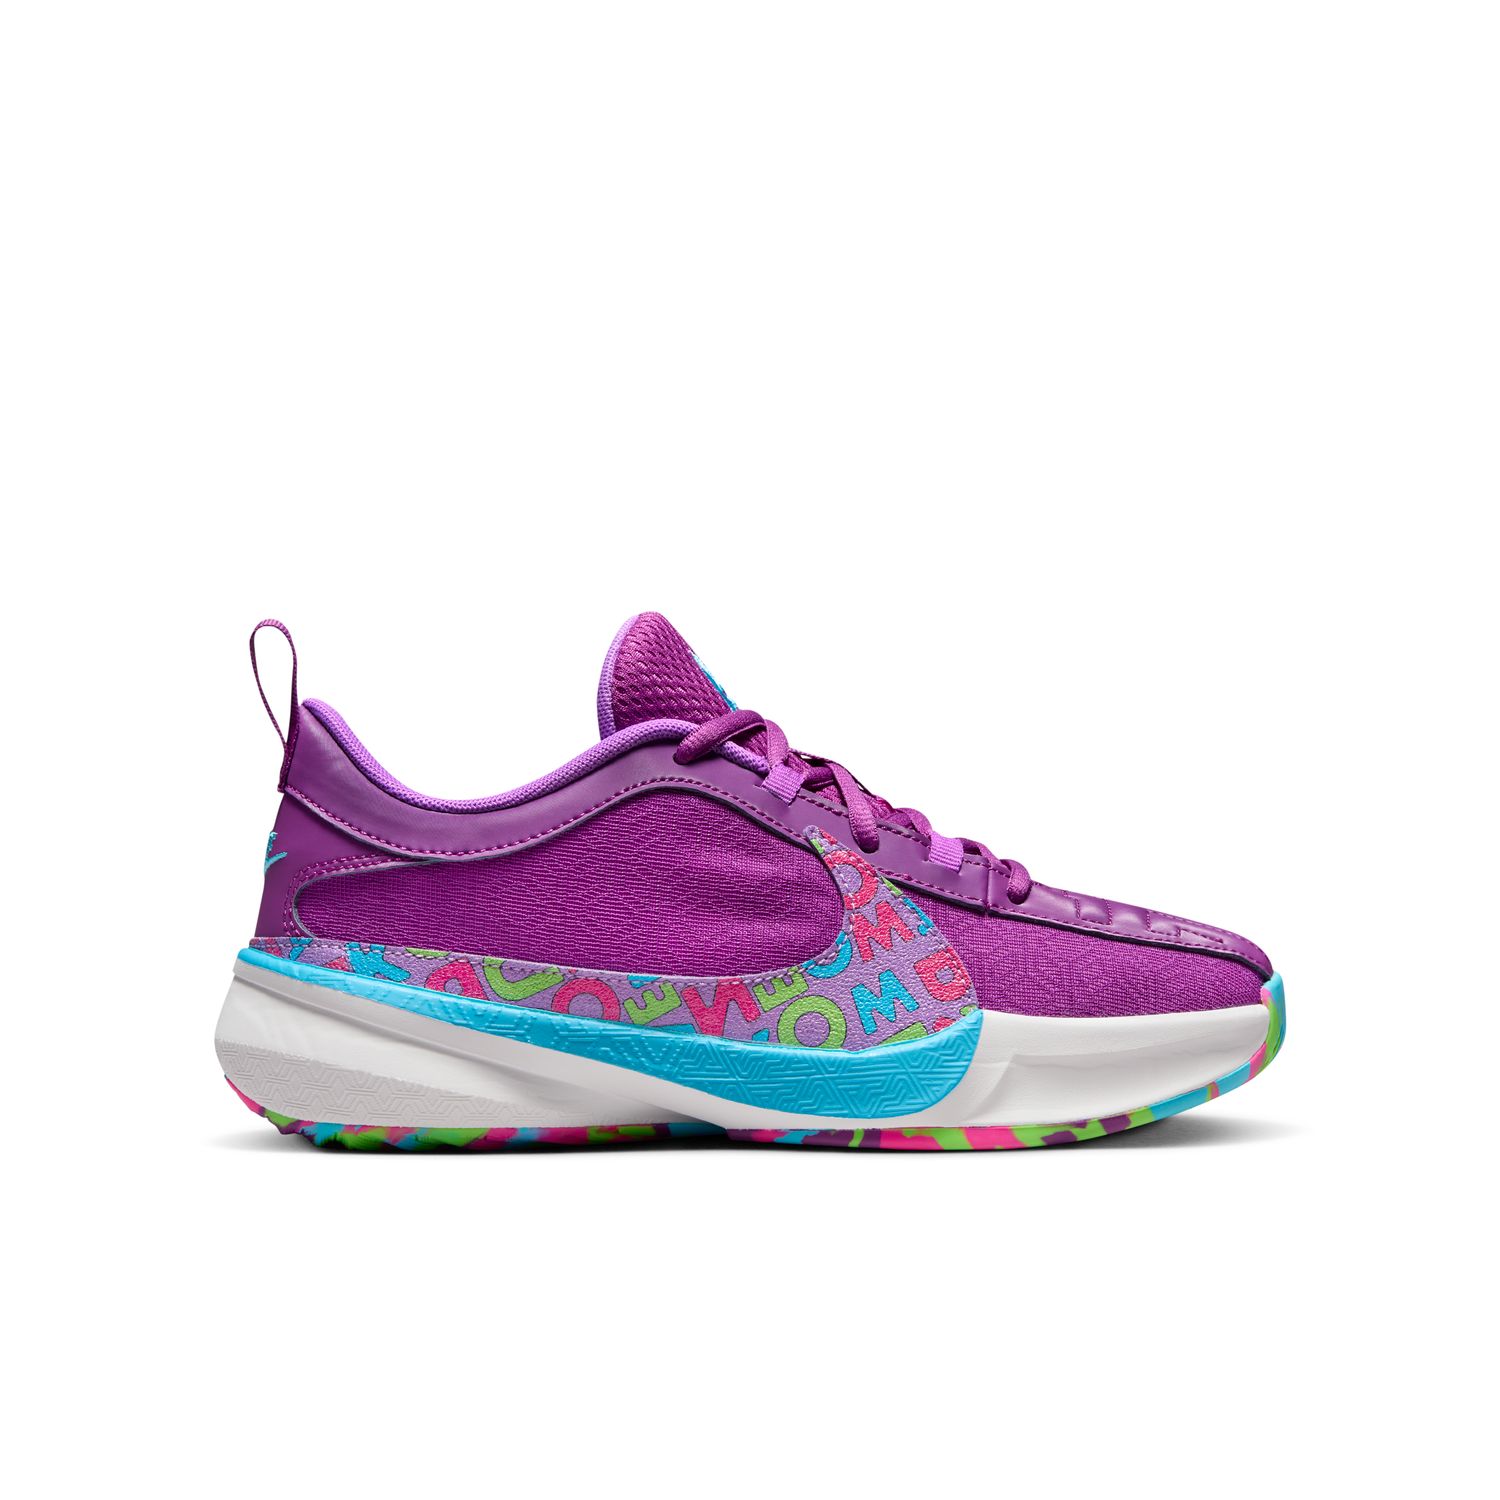 Nike Zoom Freak 5 "Bold Berry" (GS) - Kinder - Turnschuhe Nike - Violett - DZ4486-500 - Größe: 38.5